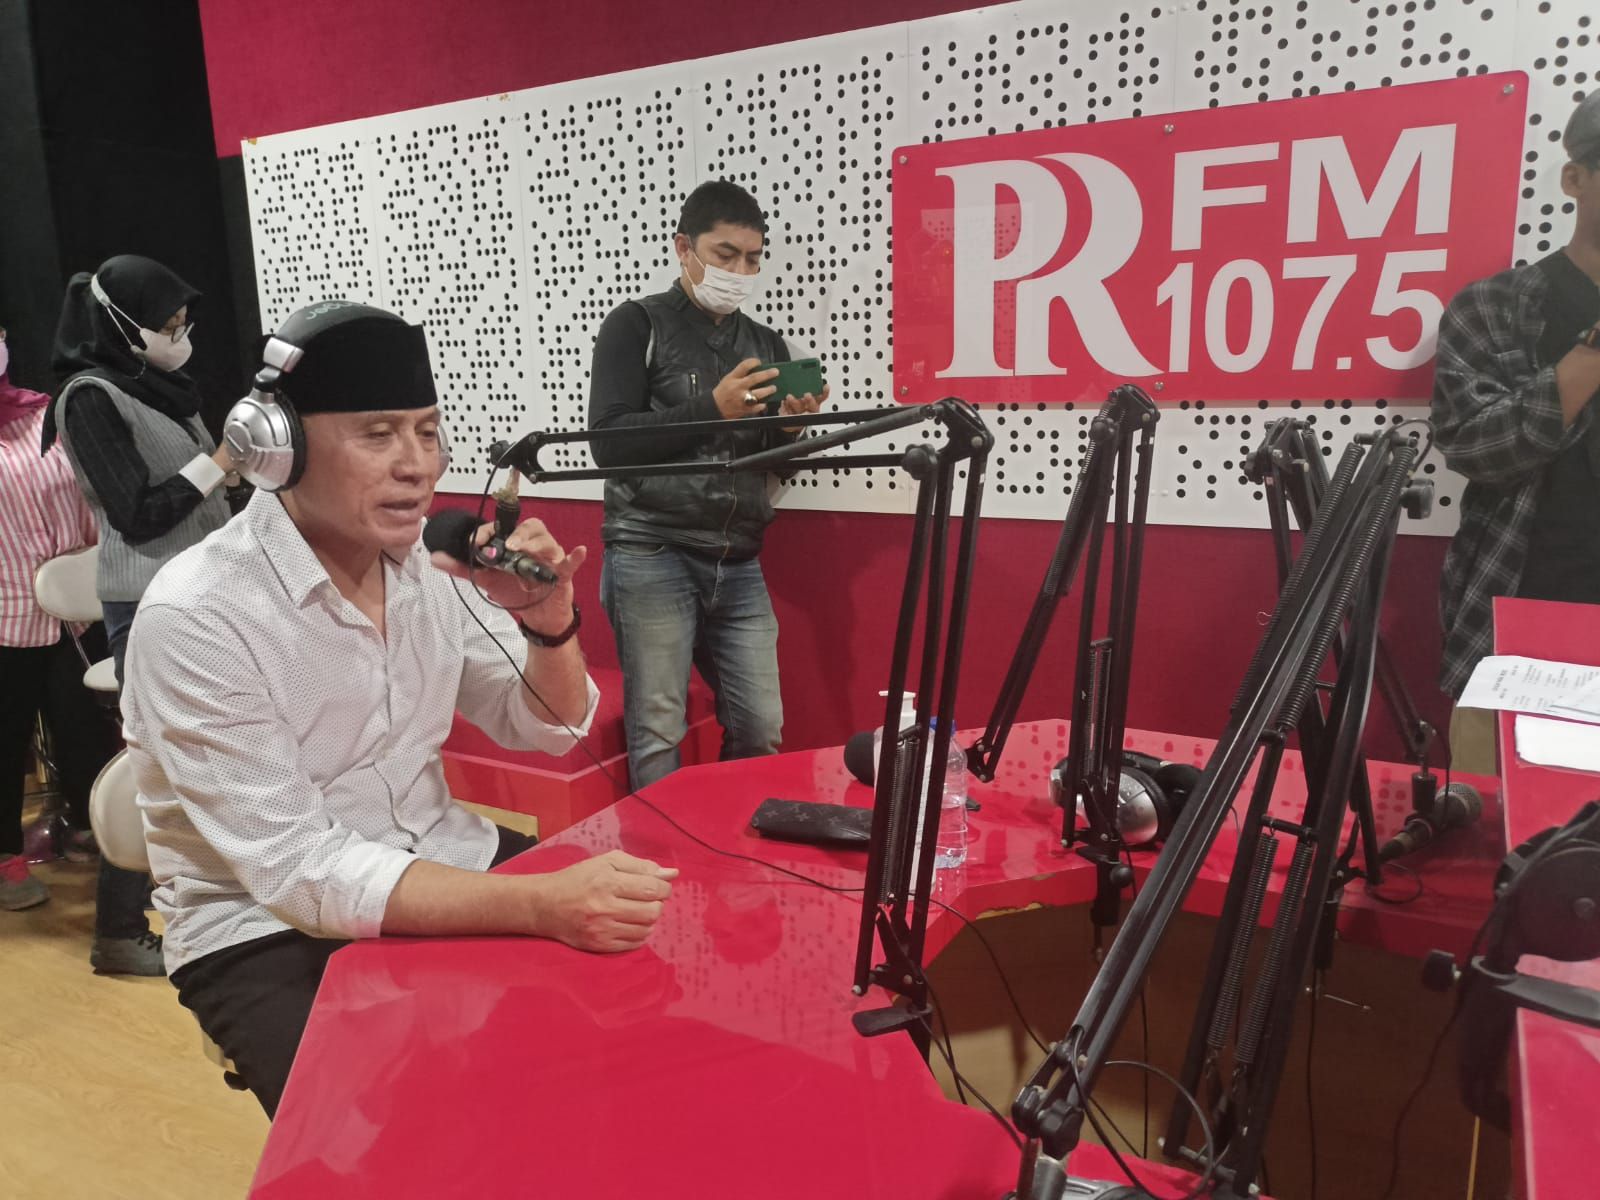 Ketum PSSI, Mochamad Iriawan di Studio Radio PRFM 107.5 News Channel, Minggu 1 Mei 2022.